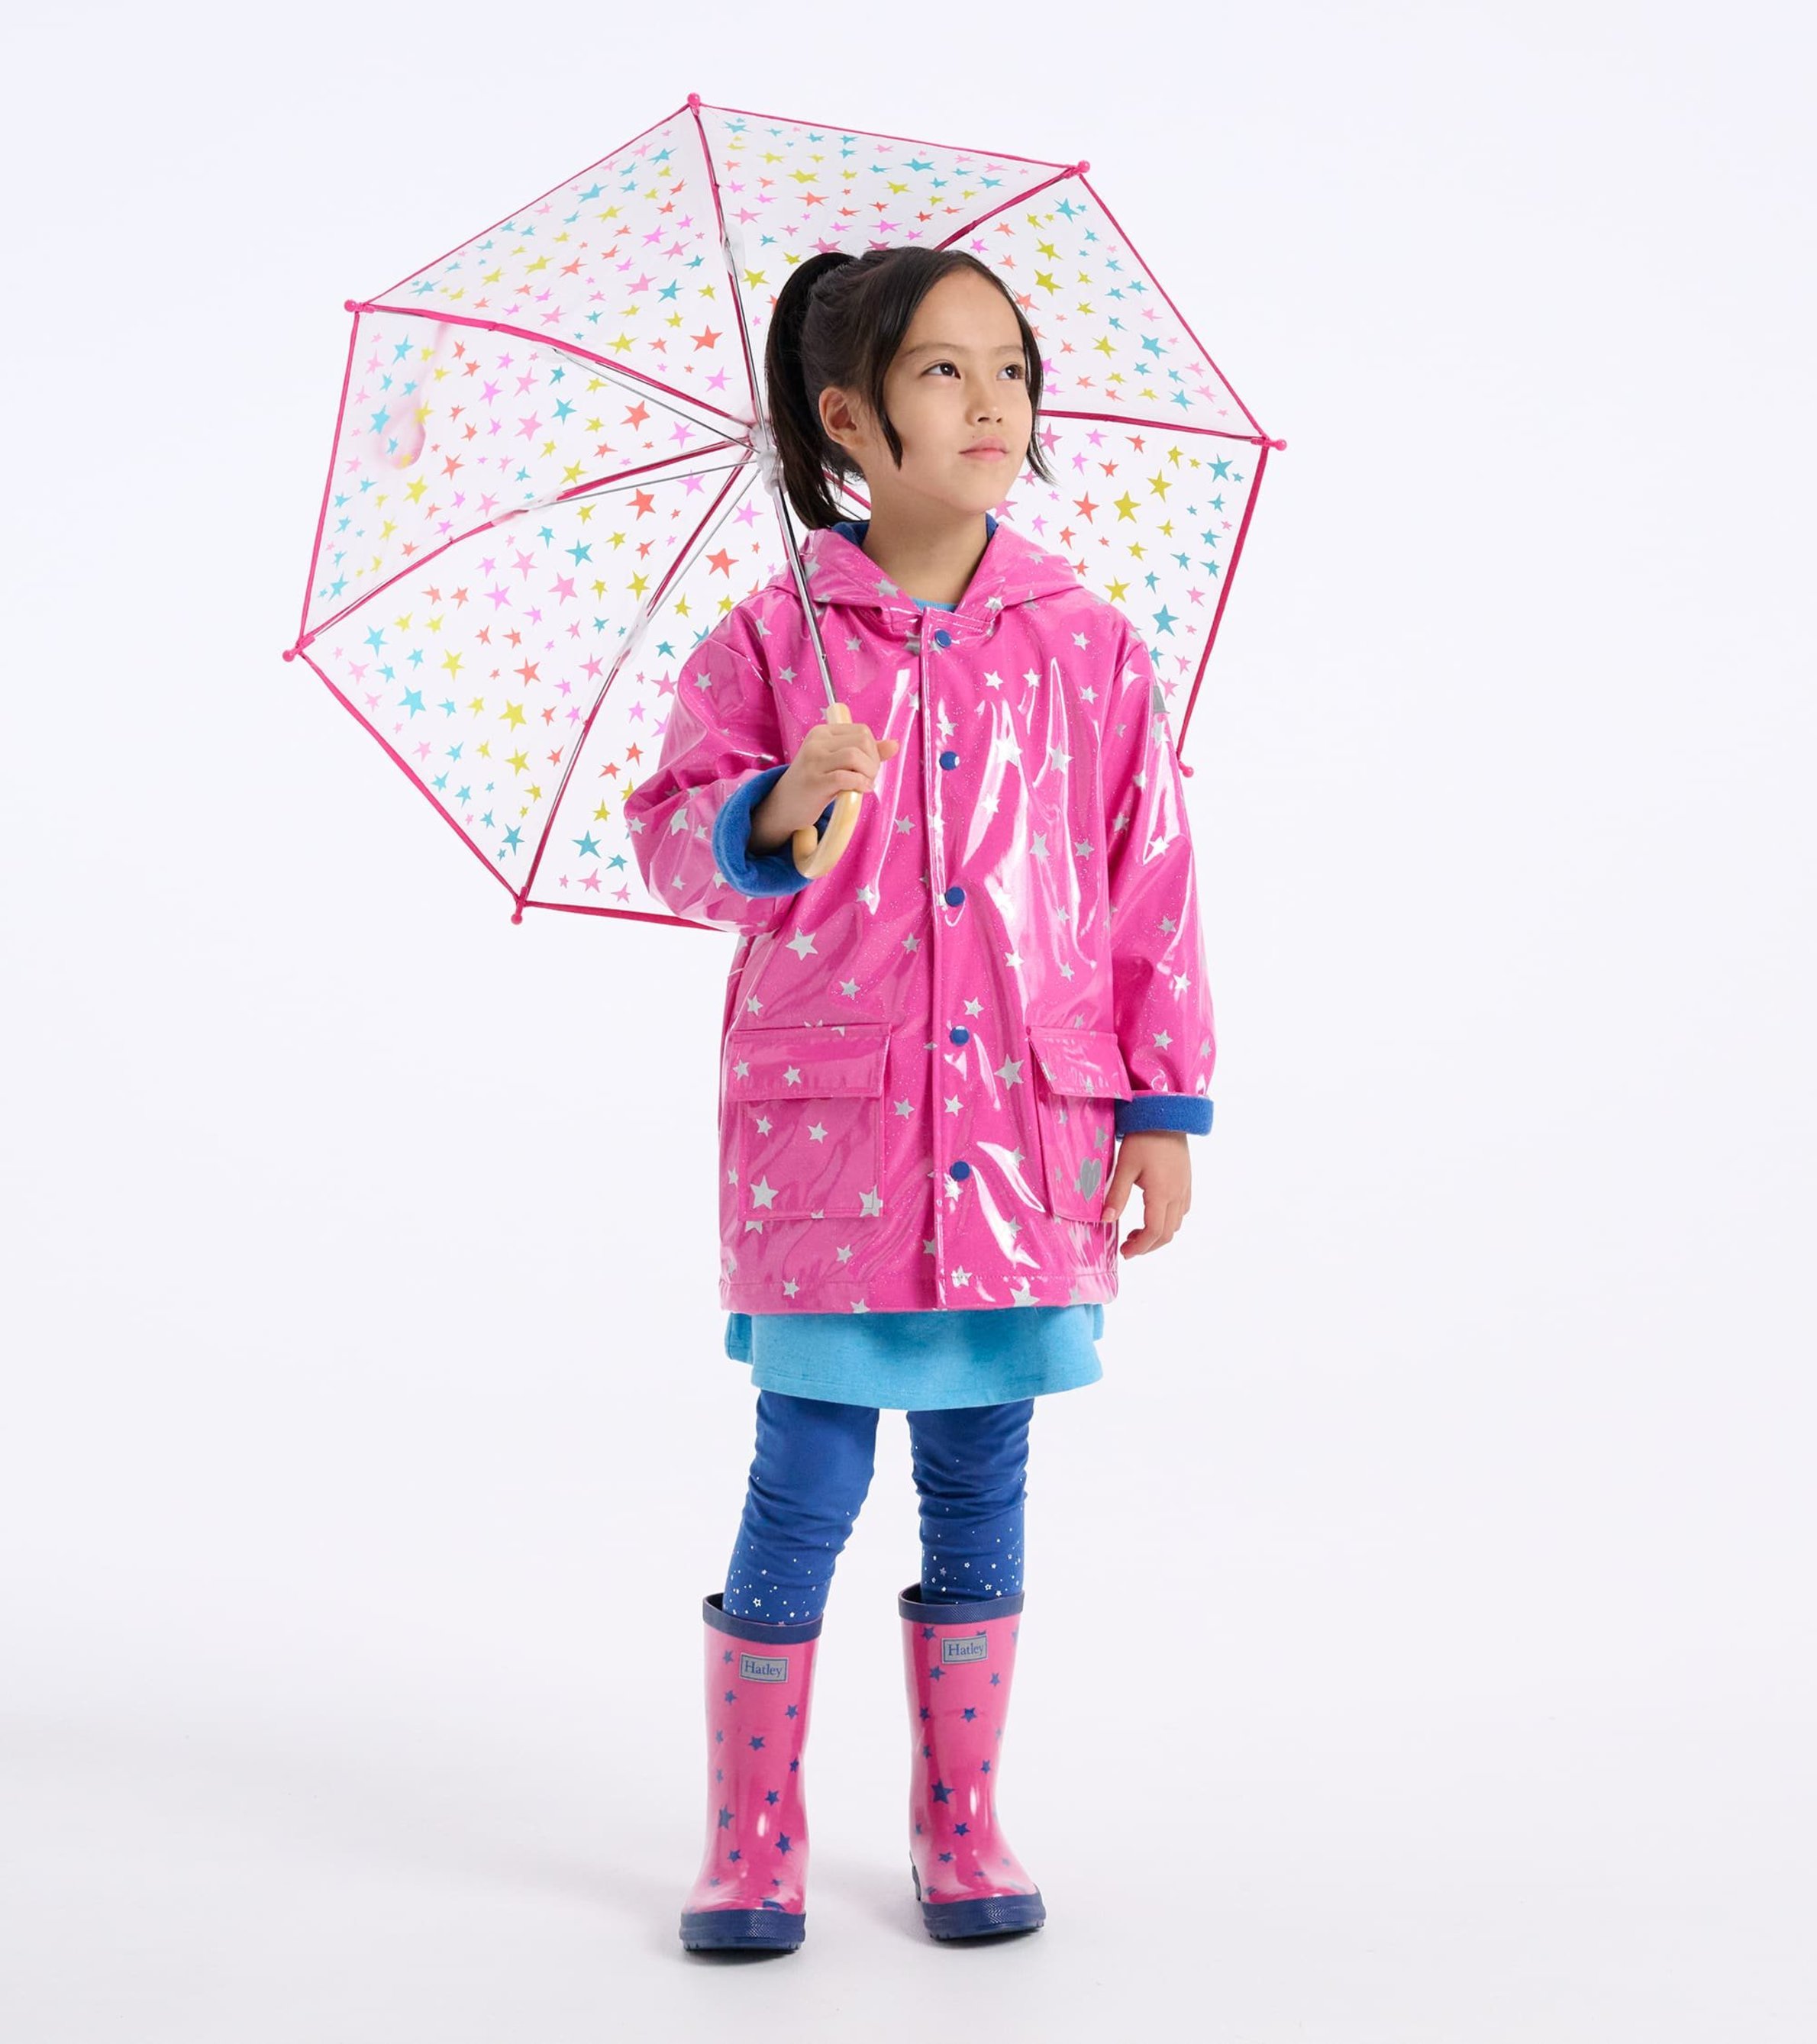 Rain Gear - Raincoats, Umbrellas, Rain Boots for Adults & Kids